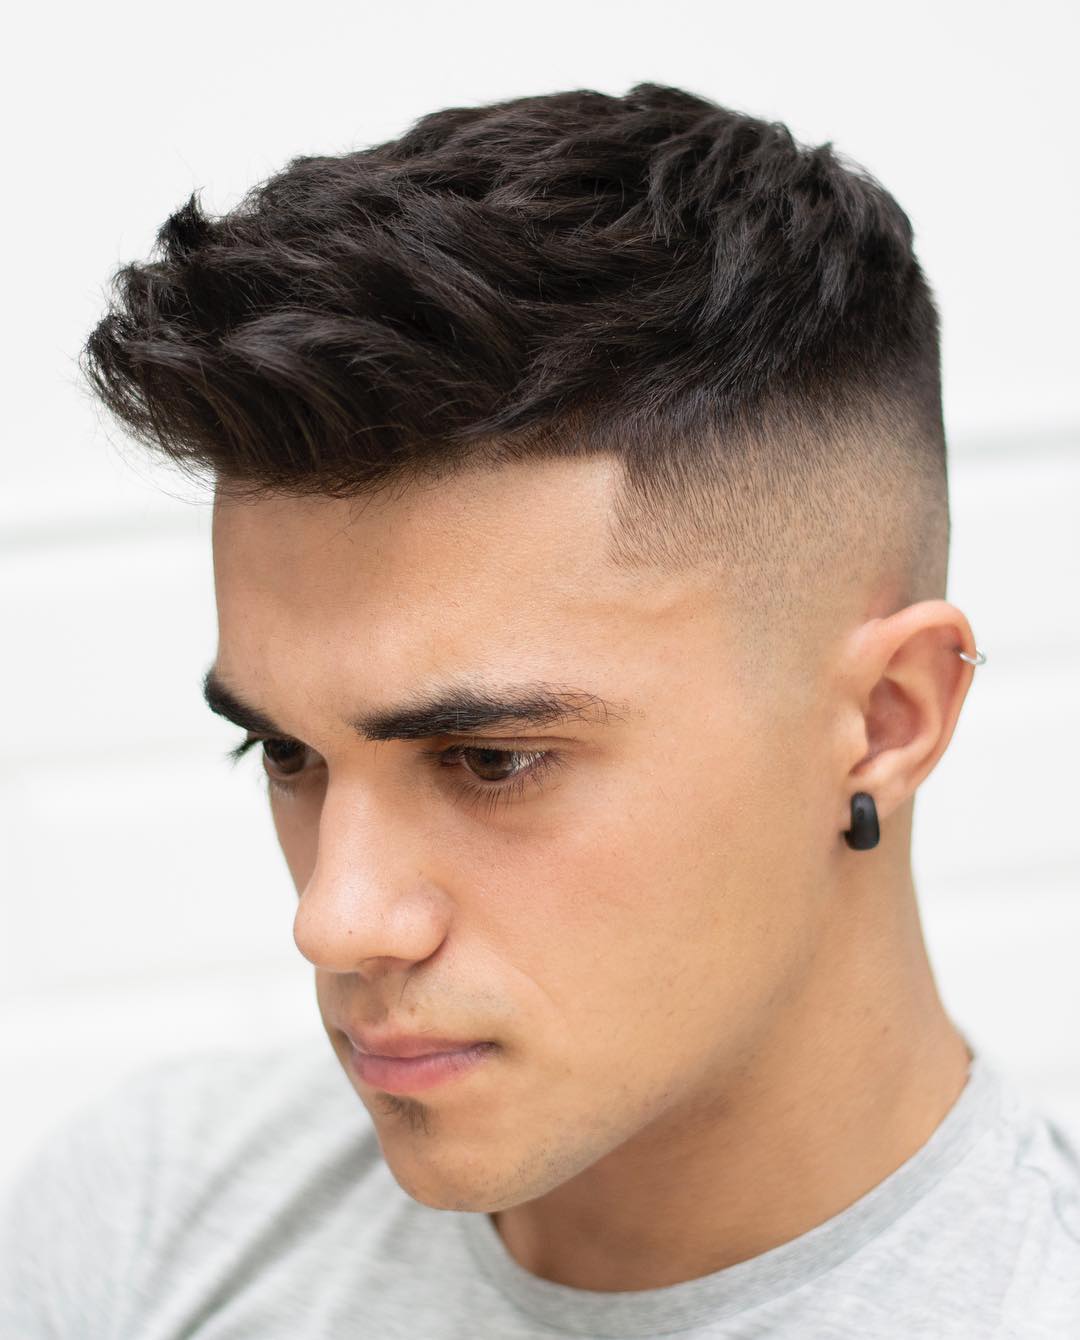 Haircuts for teen boys